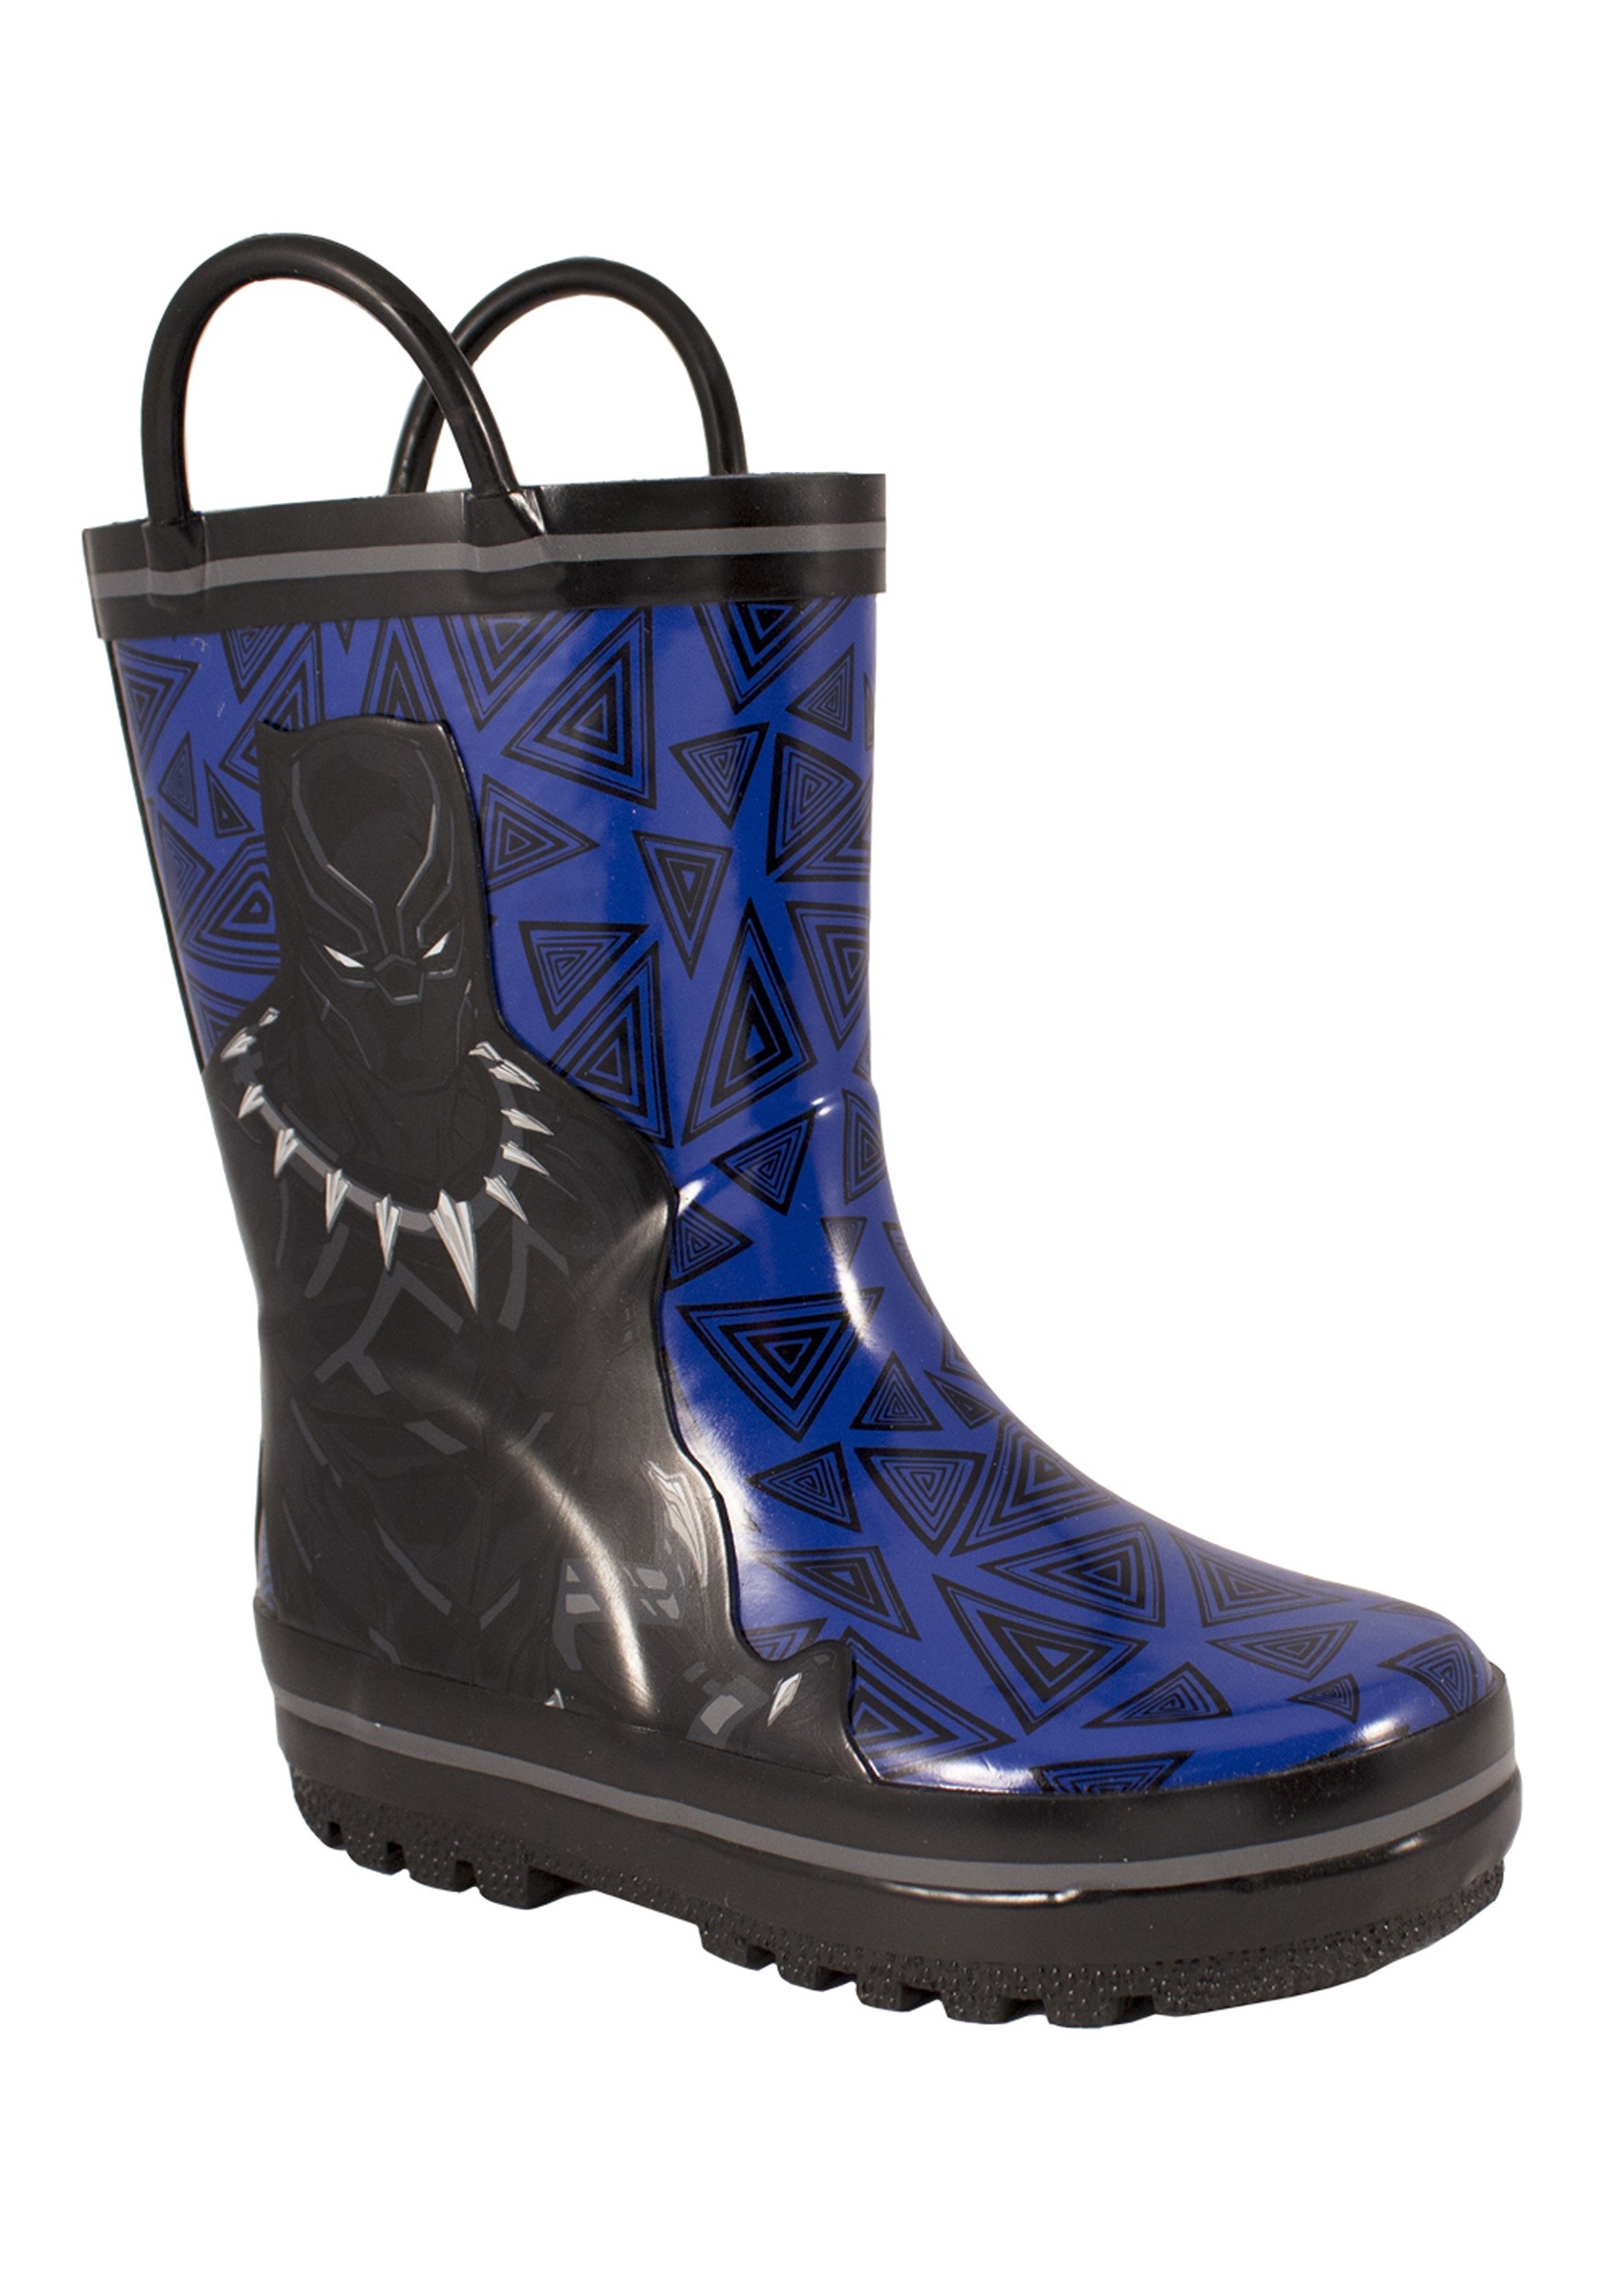 blue rain boots walmart